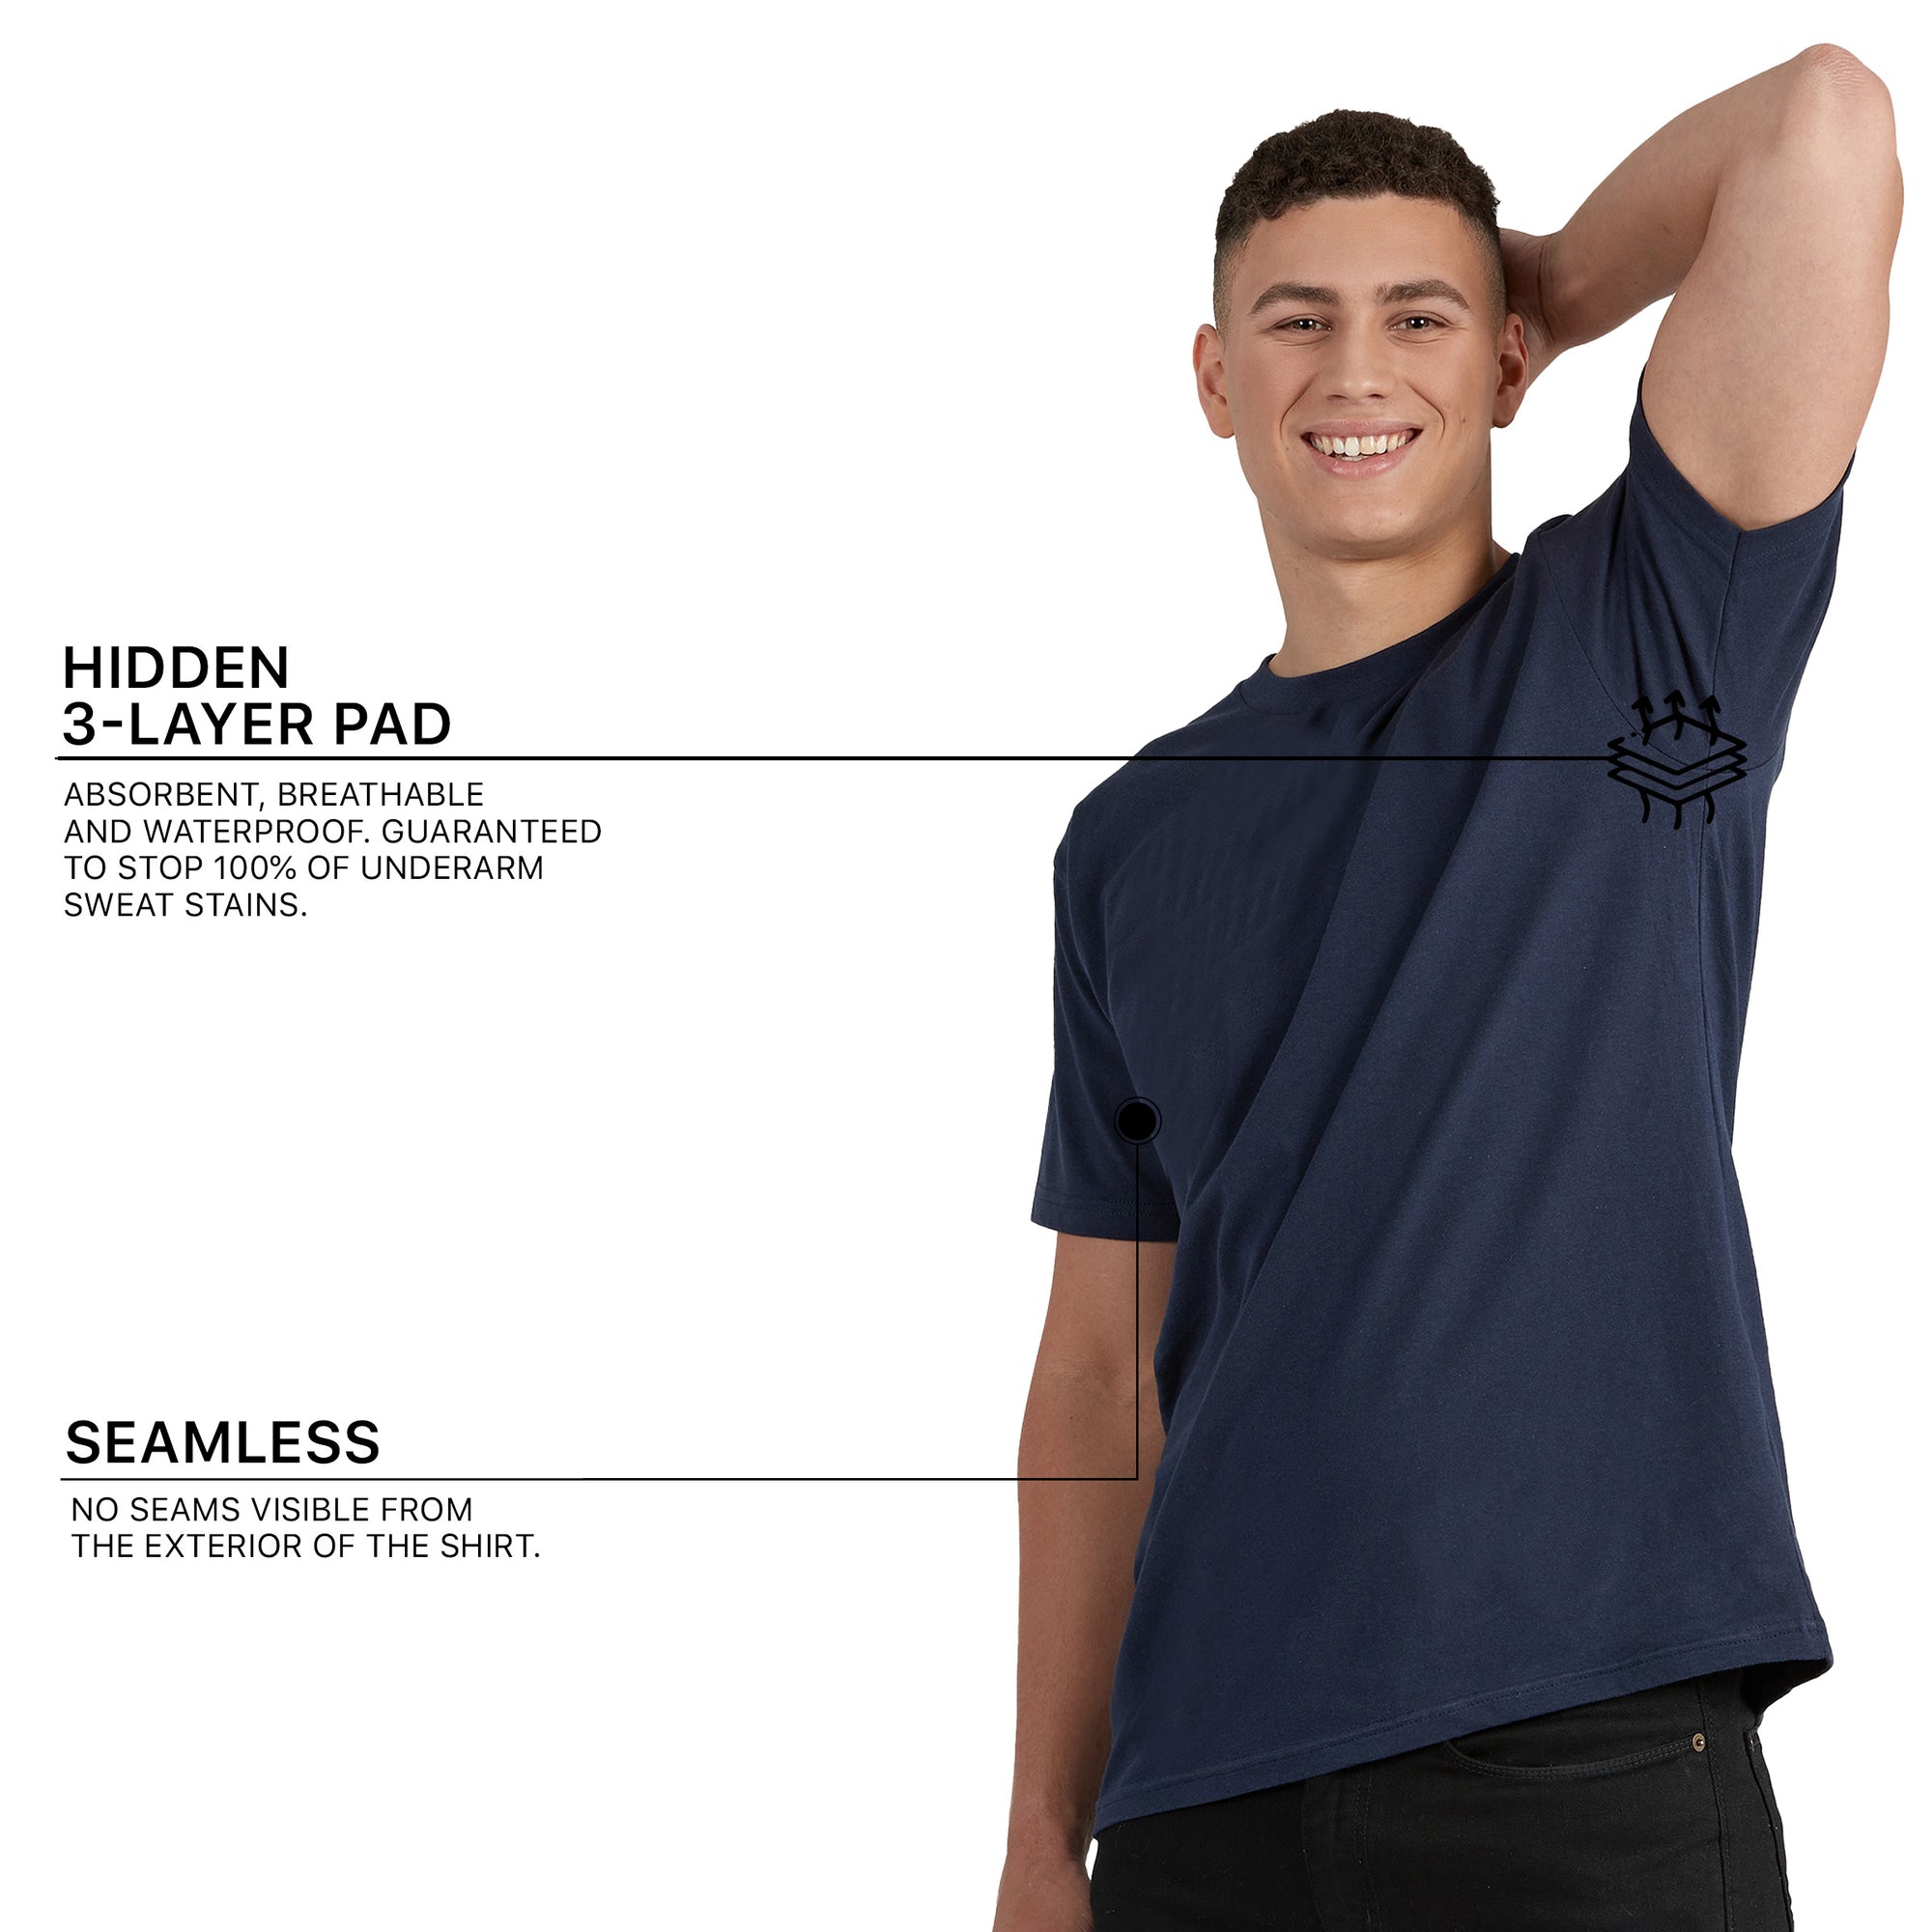 Shirts for sweating contain a seamless, hidden underarm pad. | Social Citizen